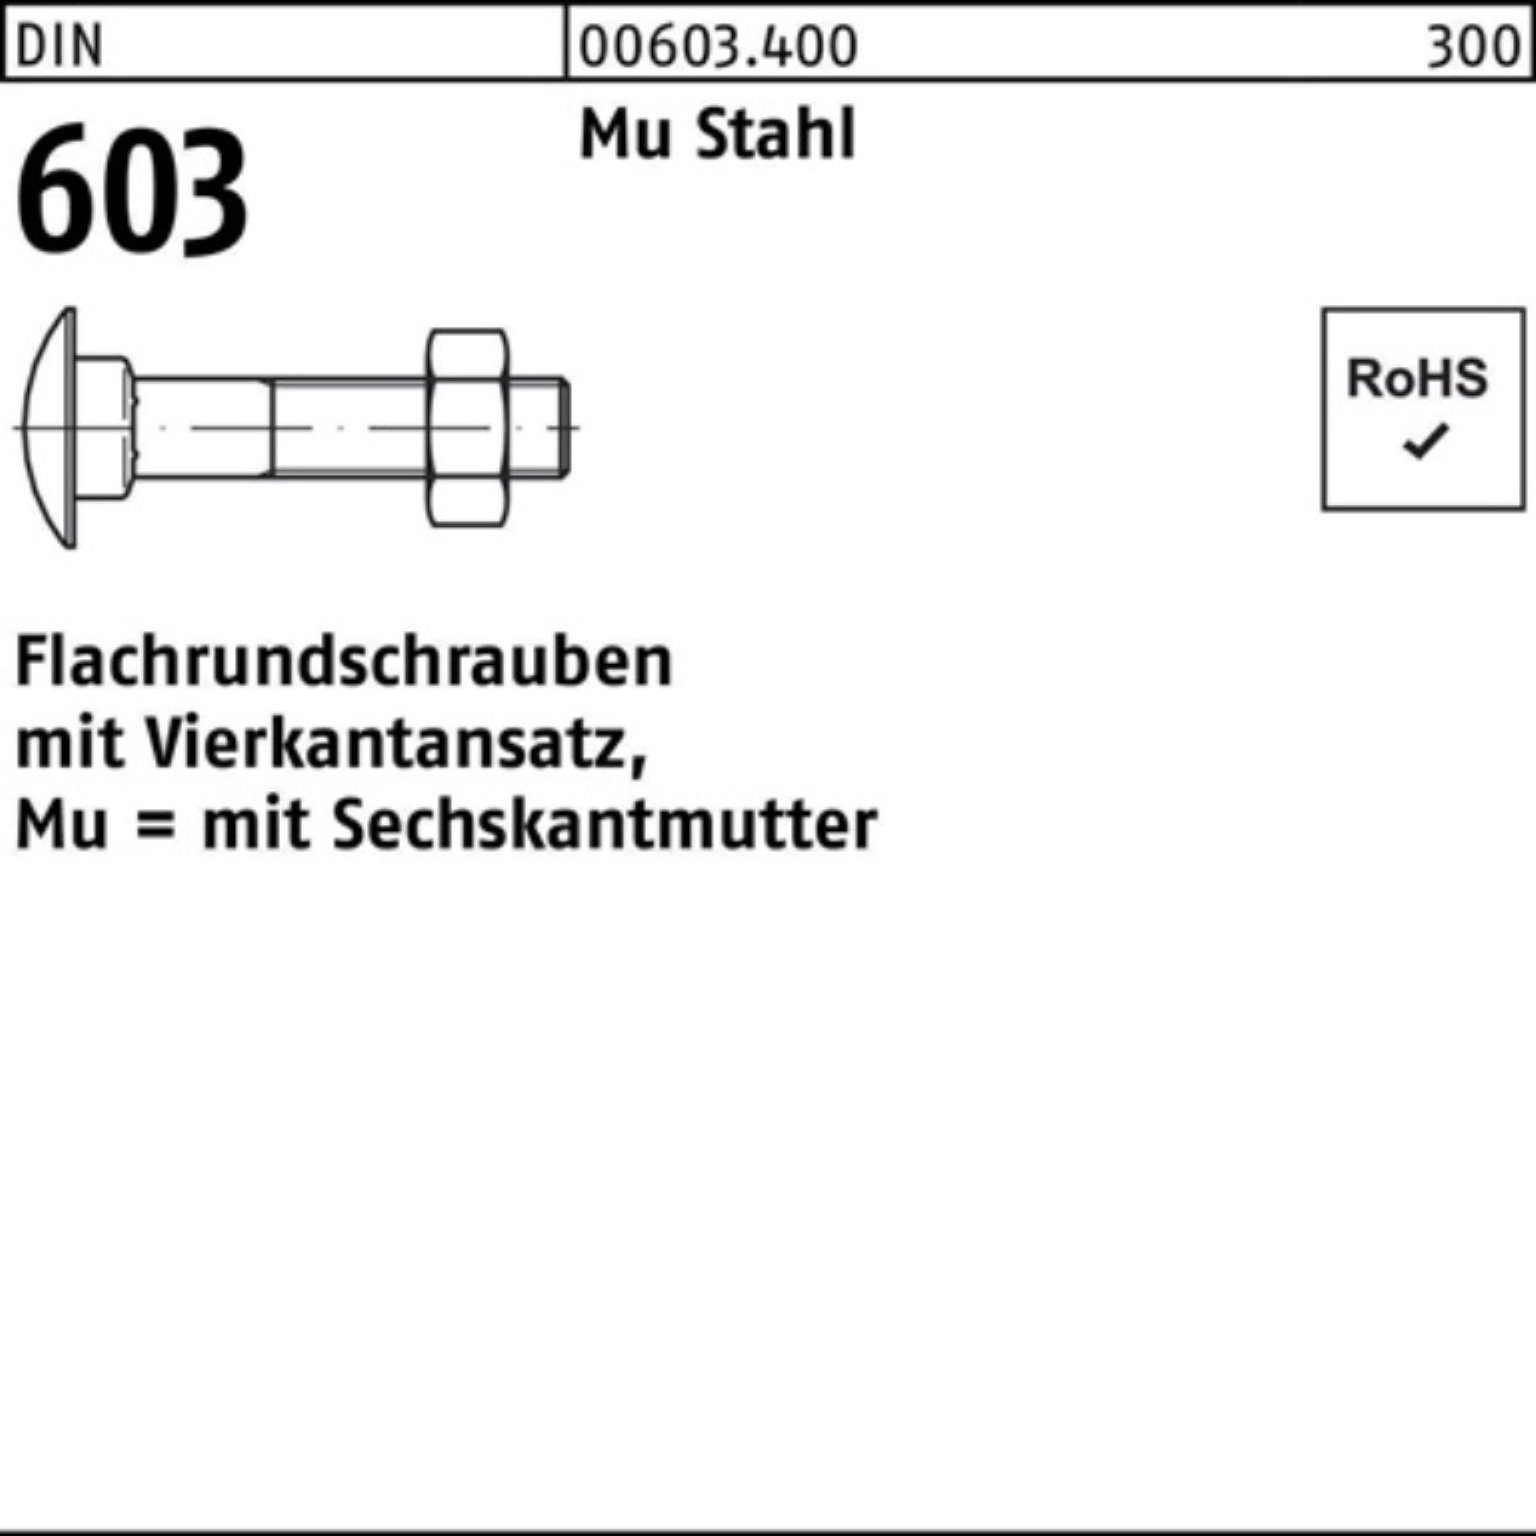 Schraube 200er M M6x45 Vierkantansatz/6-ktmutter Flachrundschraube 603 DIN Reyher Pack